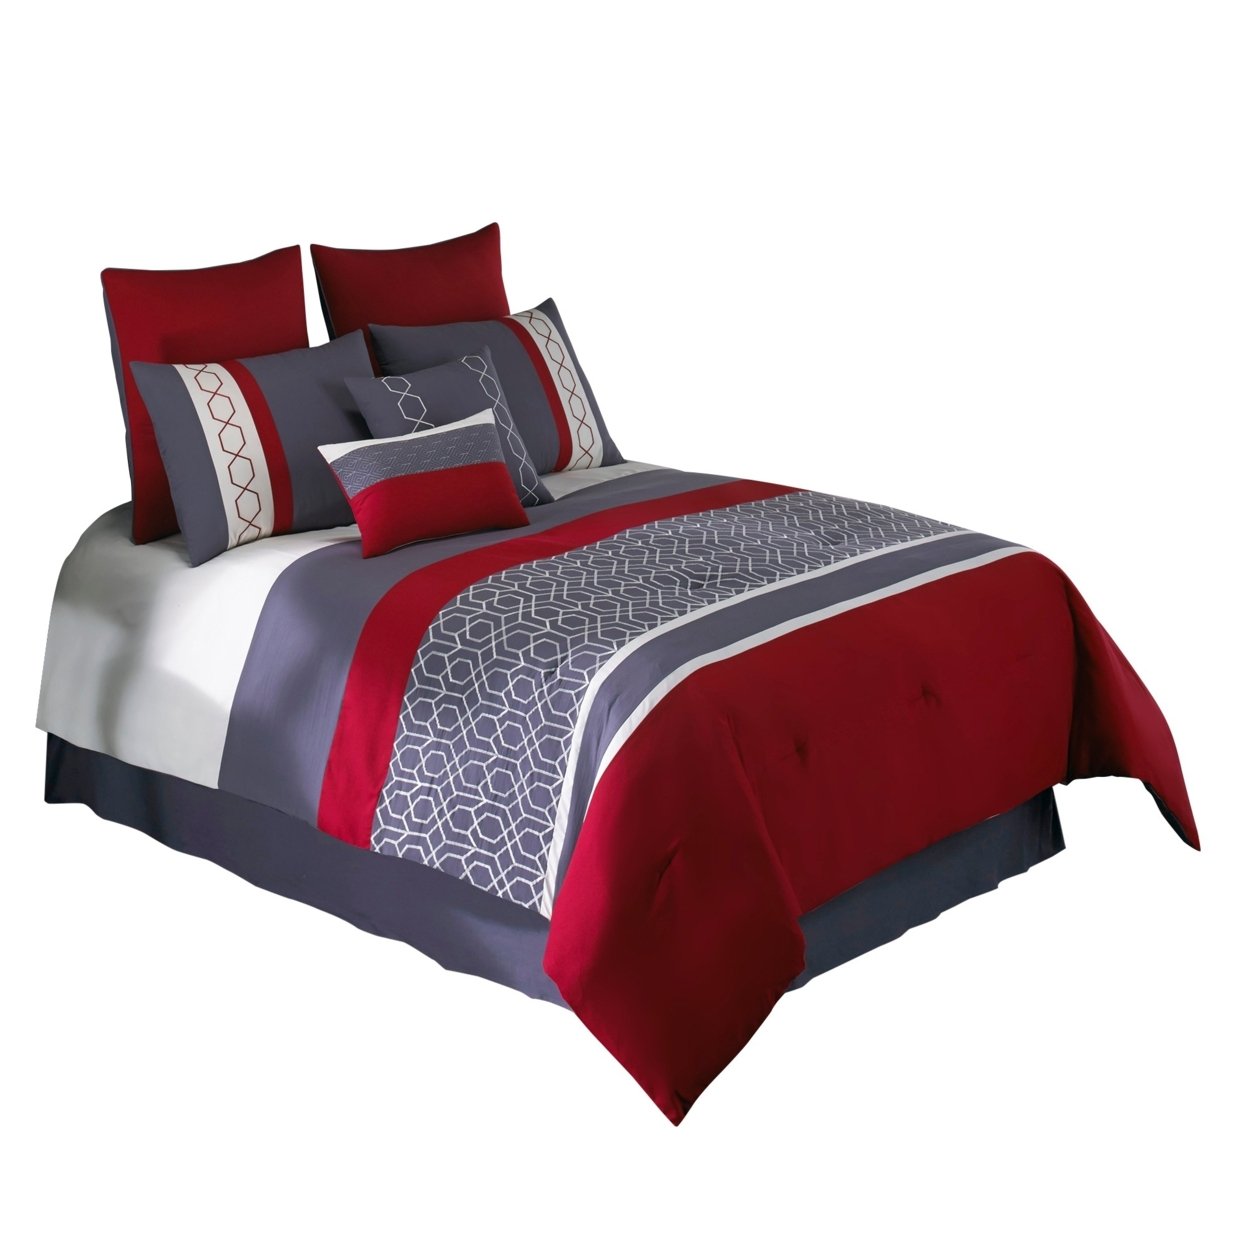 8 Piece Queen Comforter Set With Printed Trellis Pattern, Red- Saltoro Sherpi